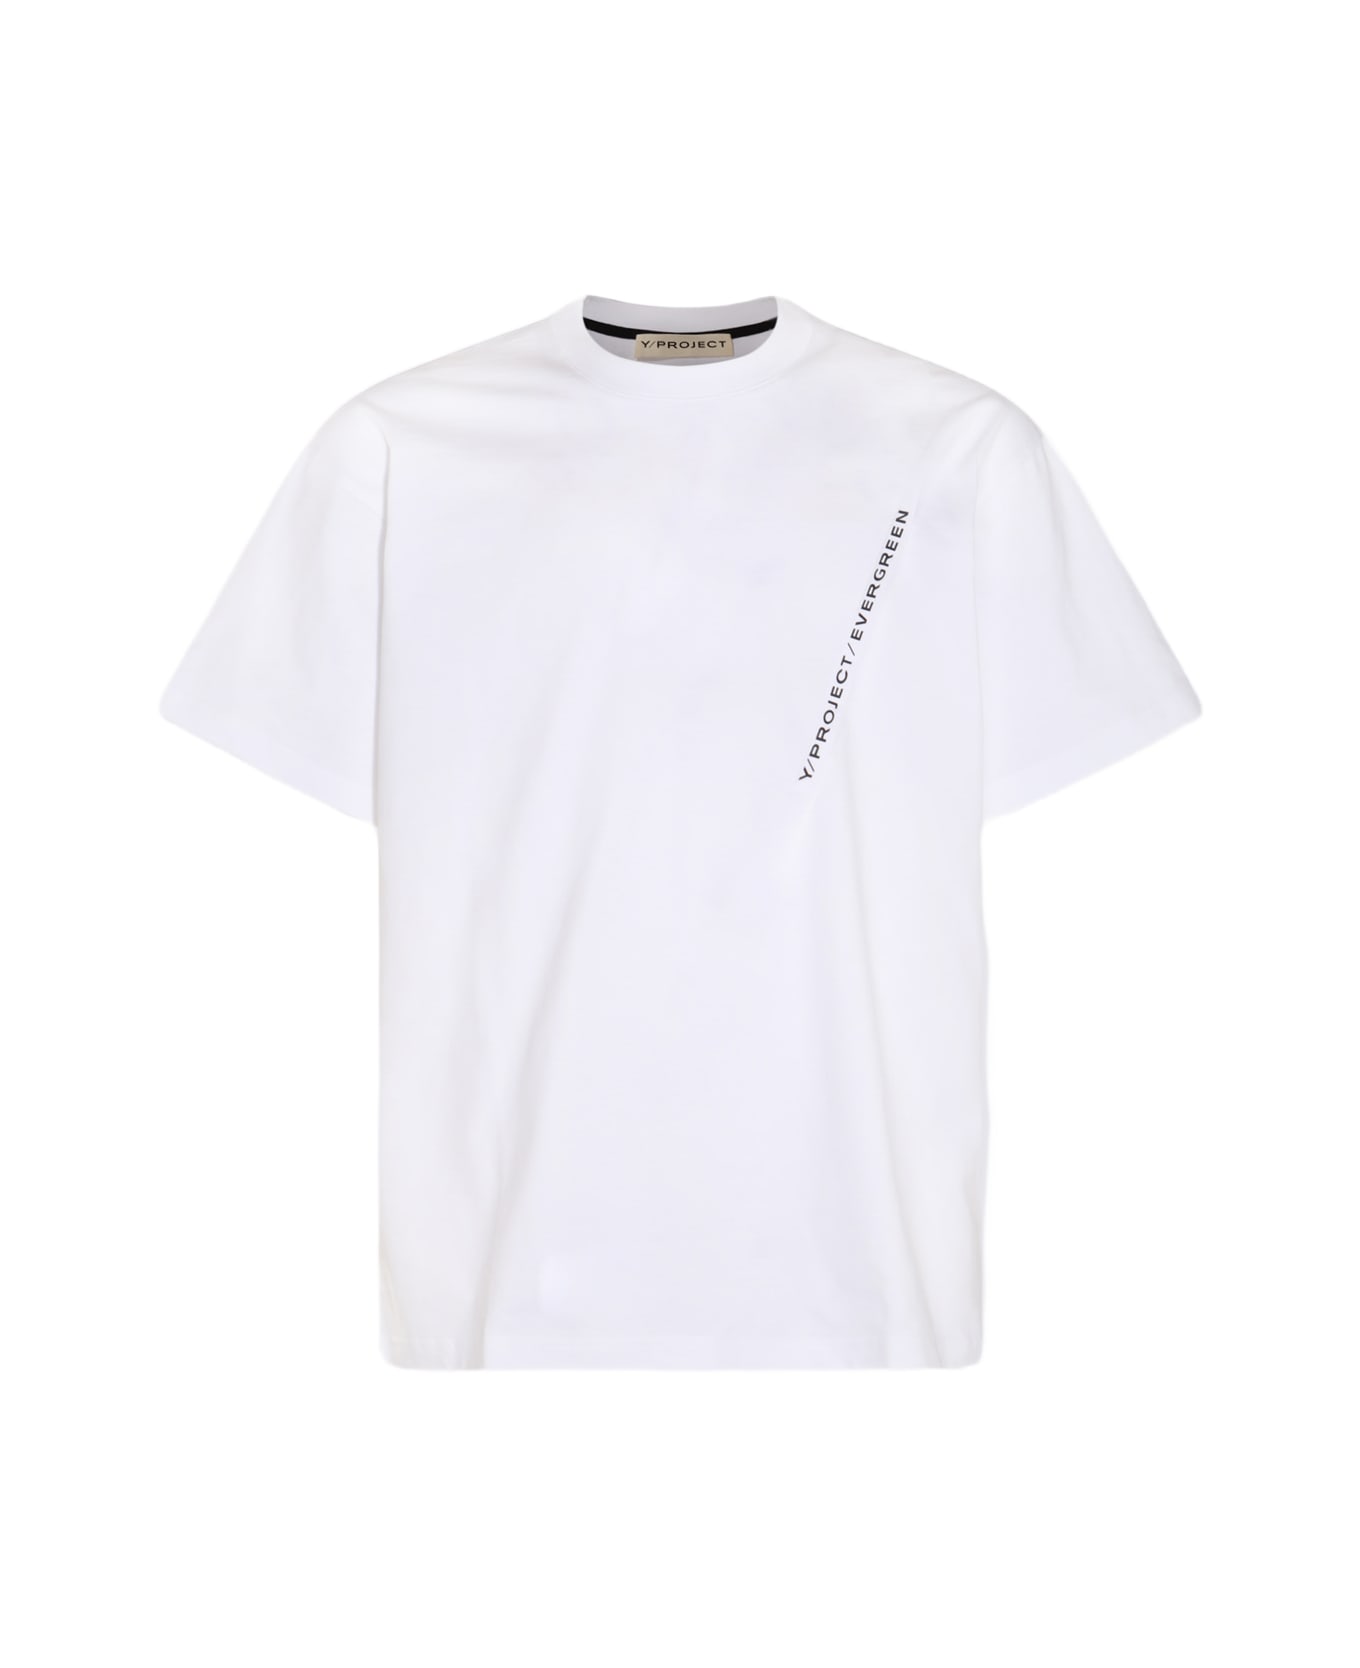 Y/Project White Cotton T-shirt